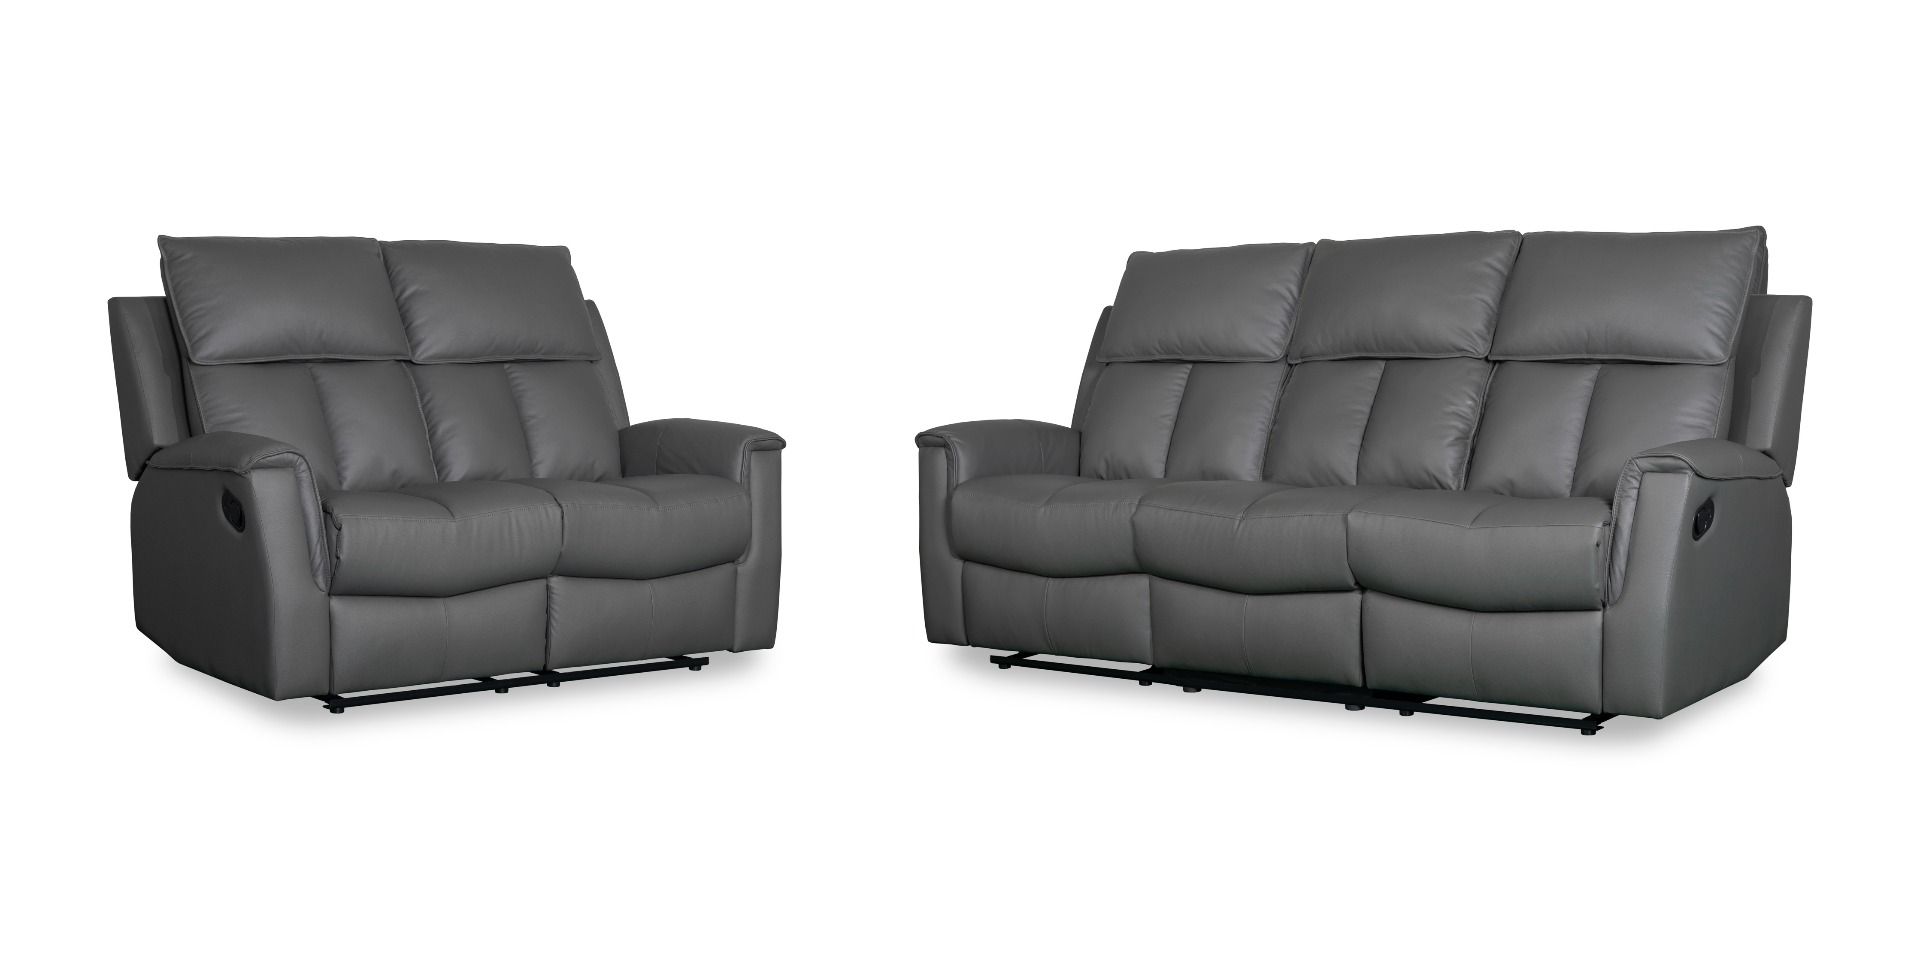 Bergamo Leather Recliner Sofa - Dark Grey